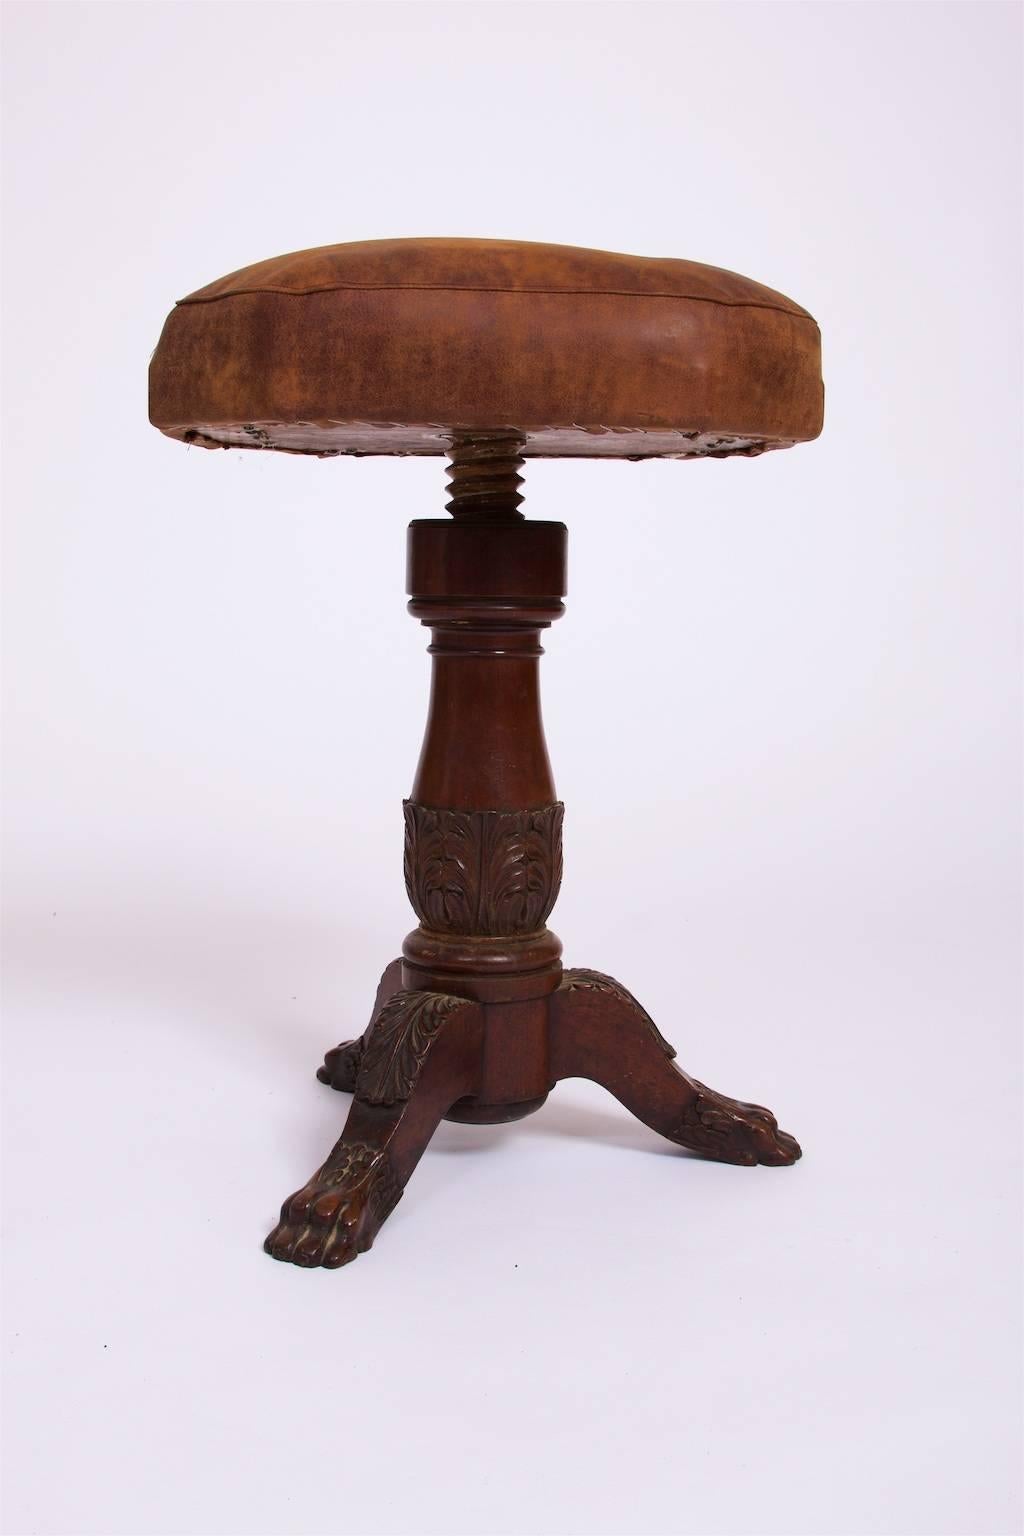 Swivelstool, Empire, circa 1820, mahogany with leather seat.